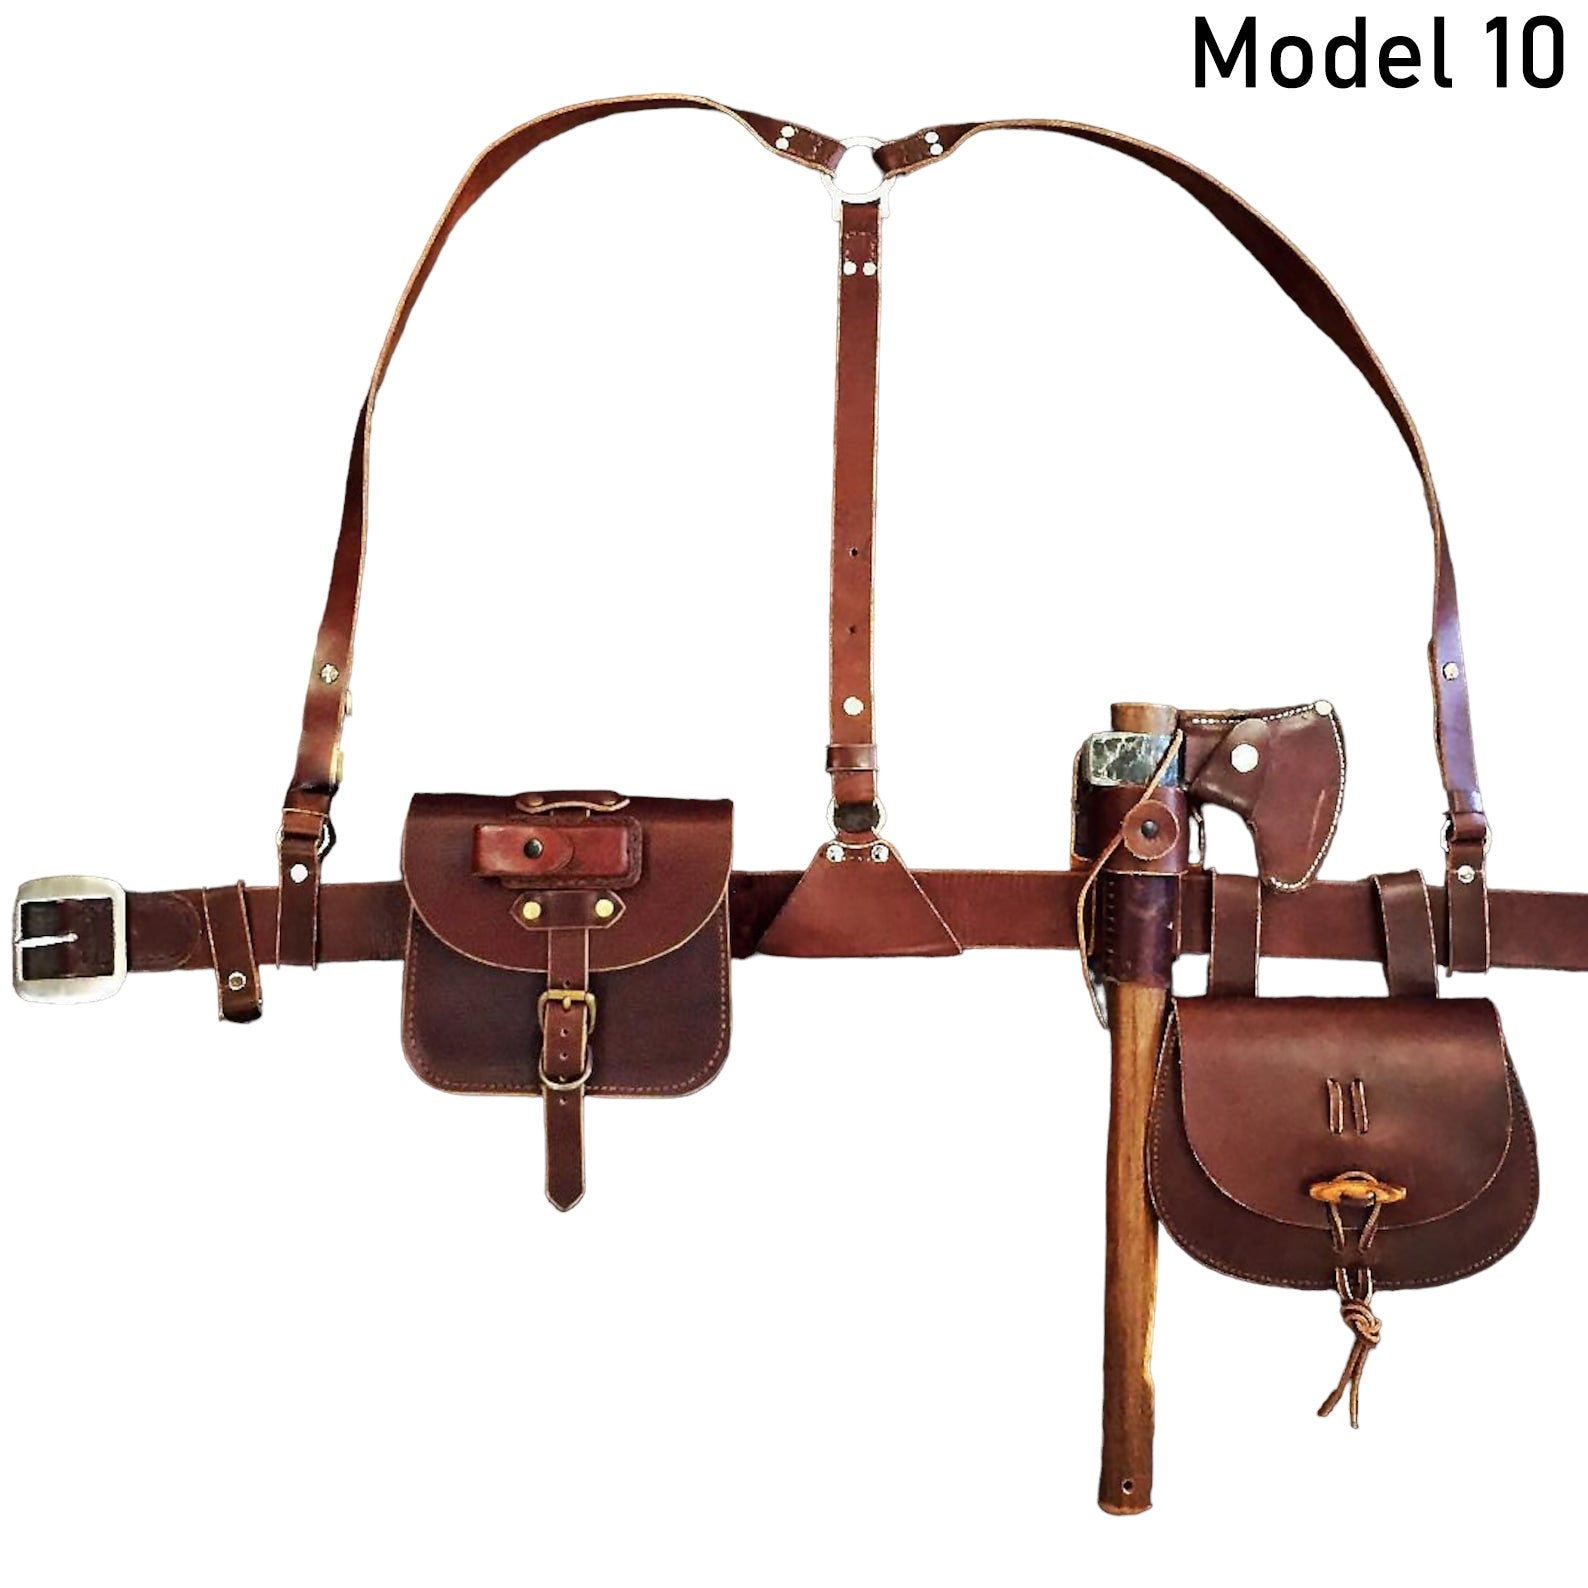 Handmade 9 Model | Leather Rifle Bag | Canvas Rifle Bag | Waxed Canvas | Leather | Rifle Bag | Hunting | Rifle | Gun case  | Personalization  99percenthandmade 40 Model 10 